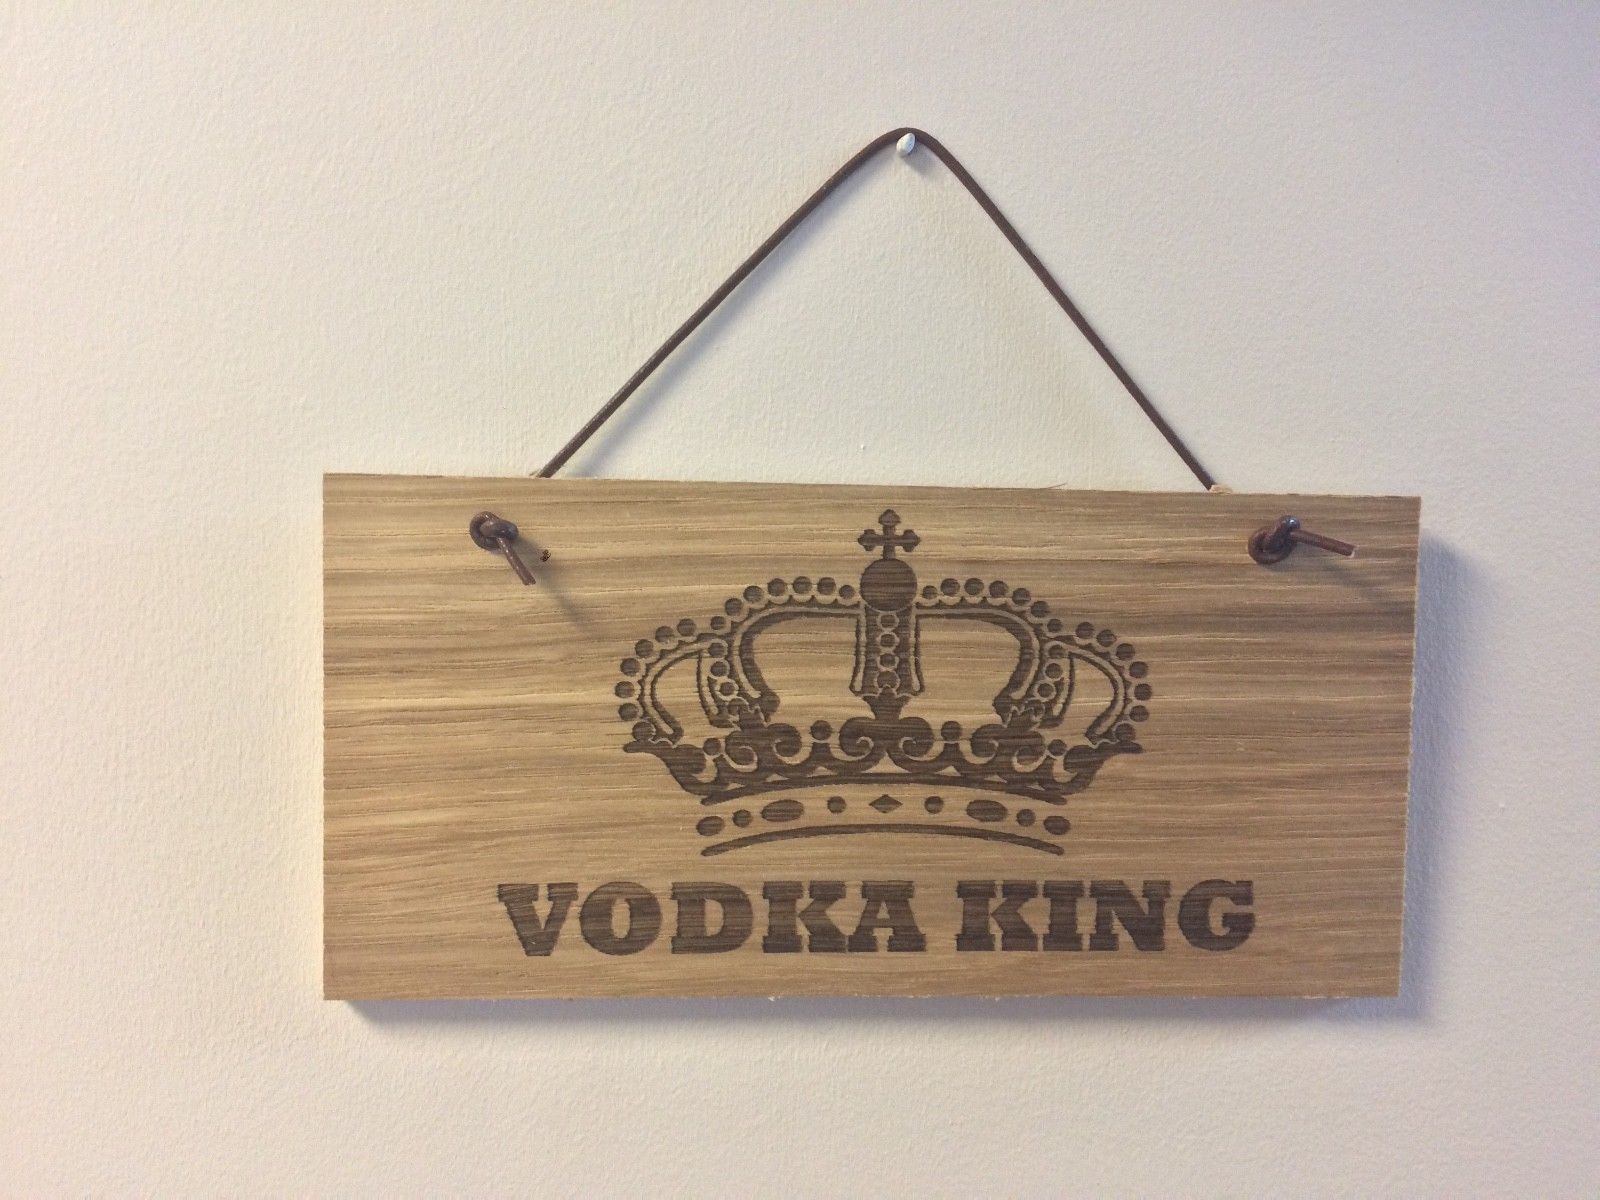 #9 Vodka King